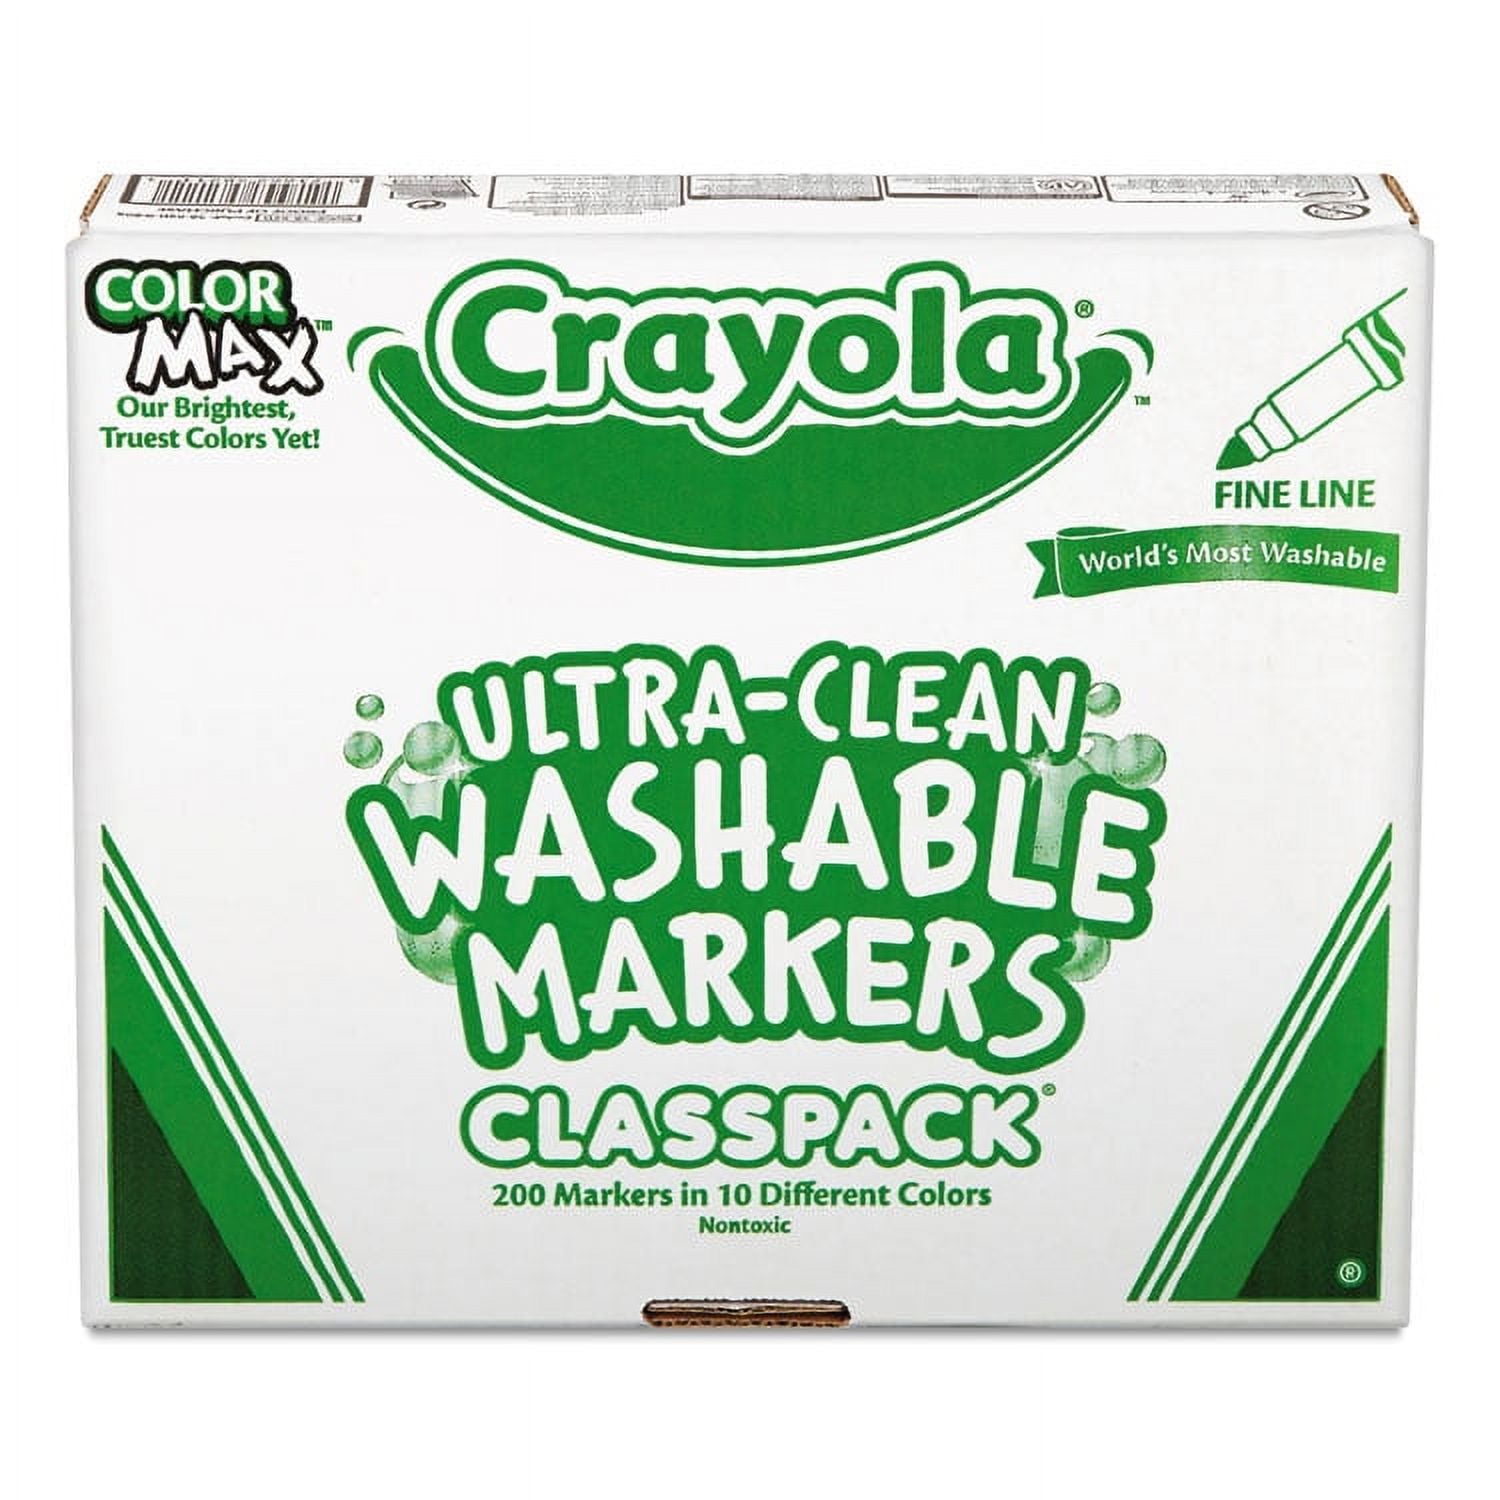 Crayola Ultra-Clean Washable Marker Set